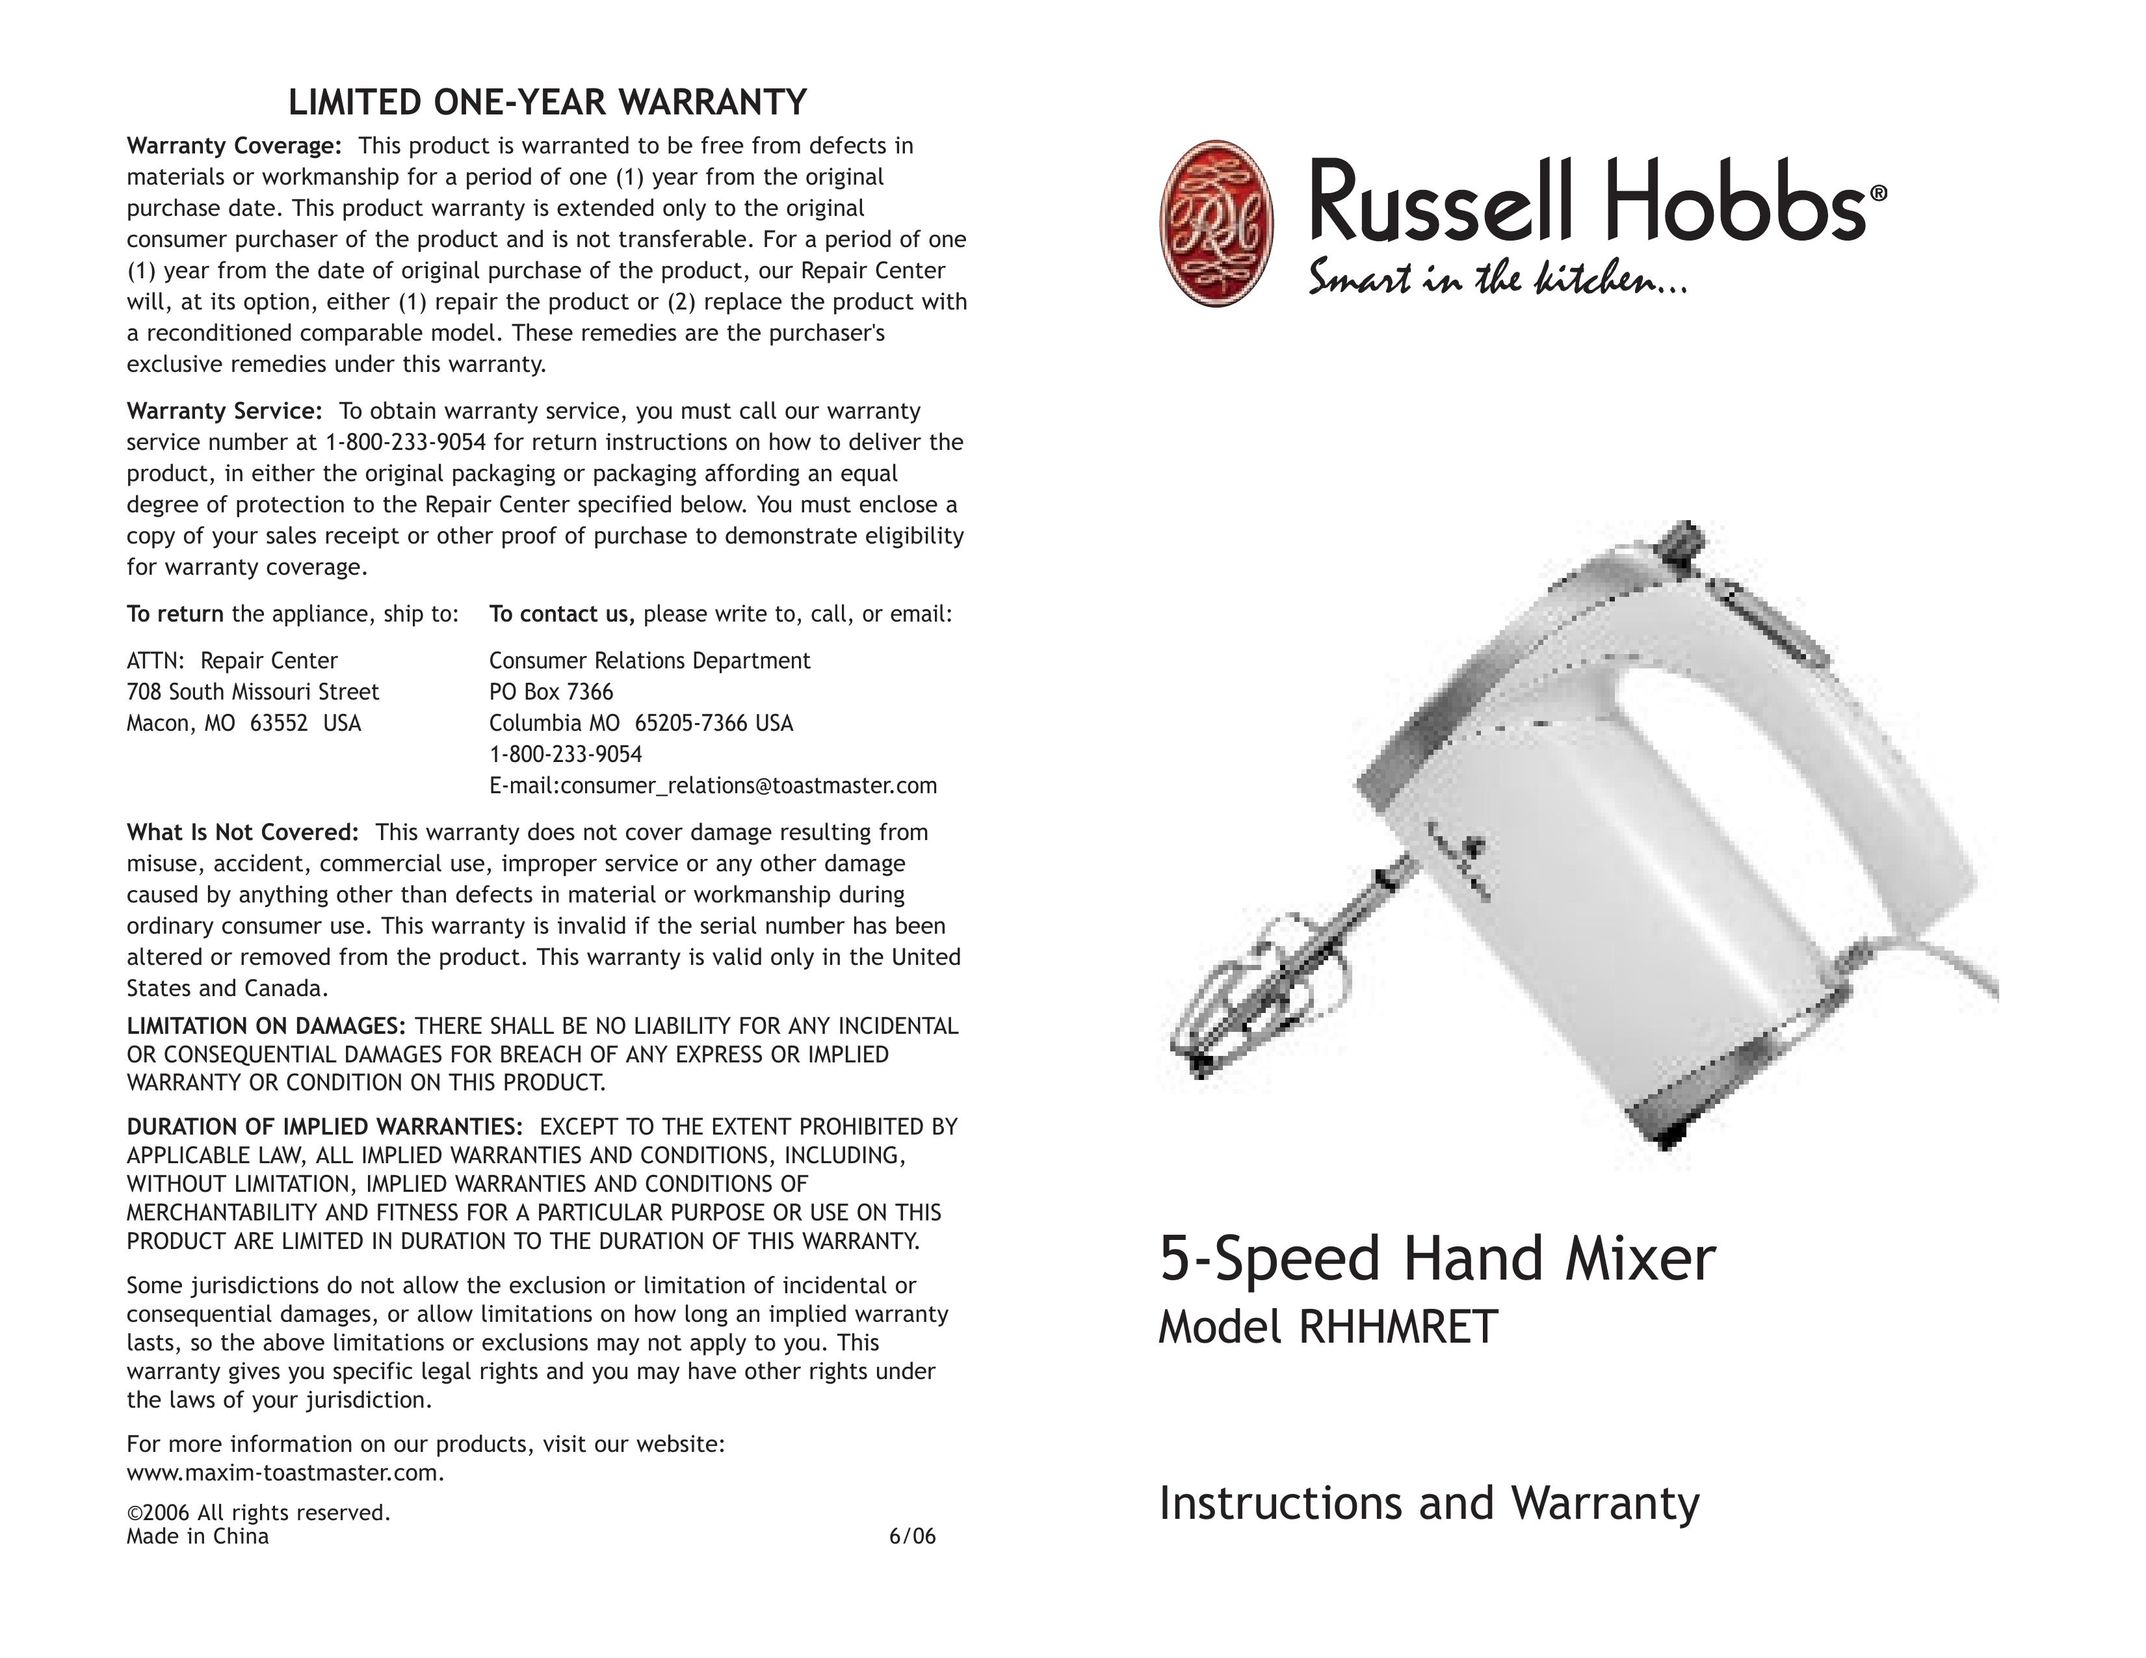 Toastmaster RHHMRET Mixer User Manual